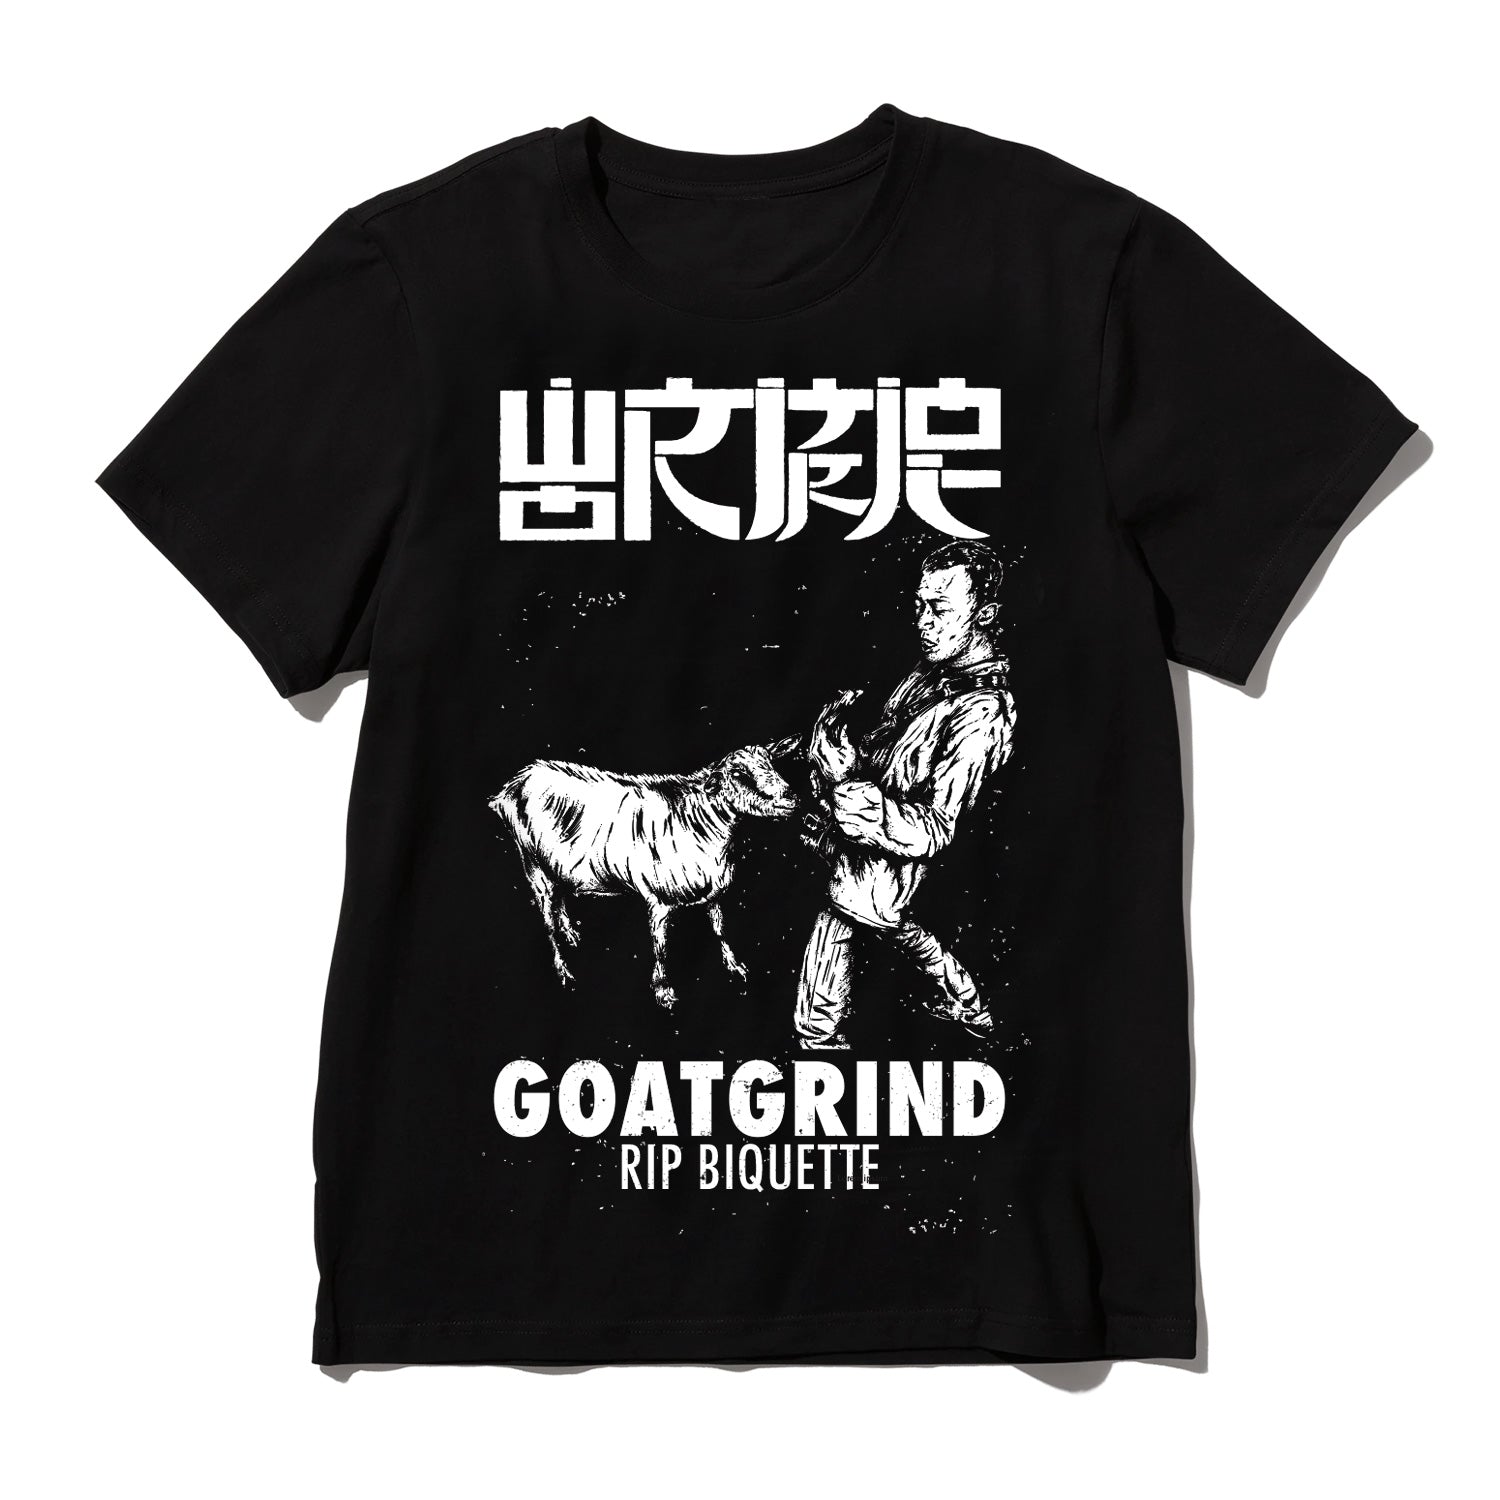 Wormrot "Goatgrind" T shirt